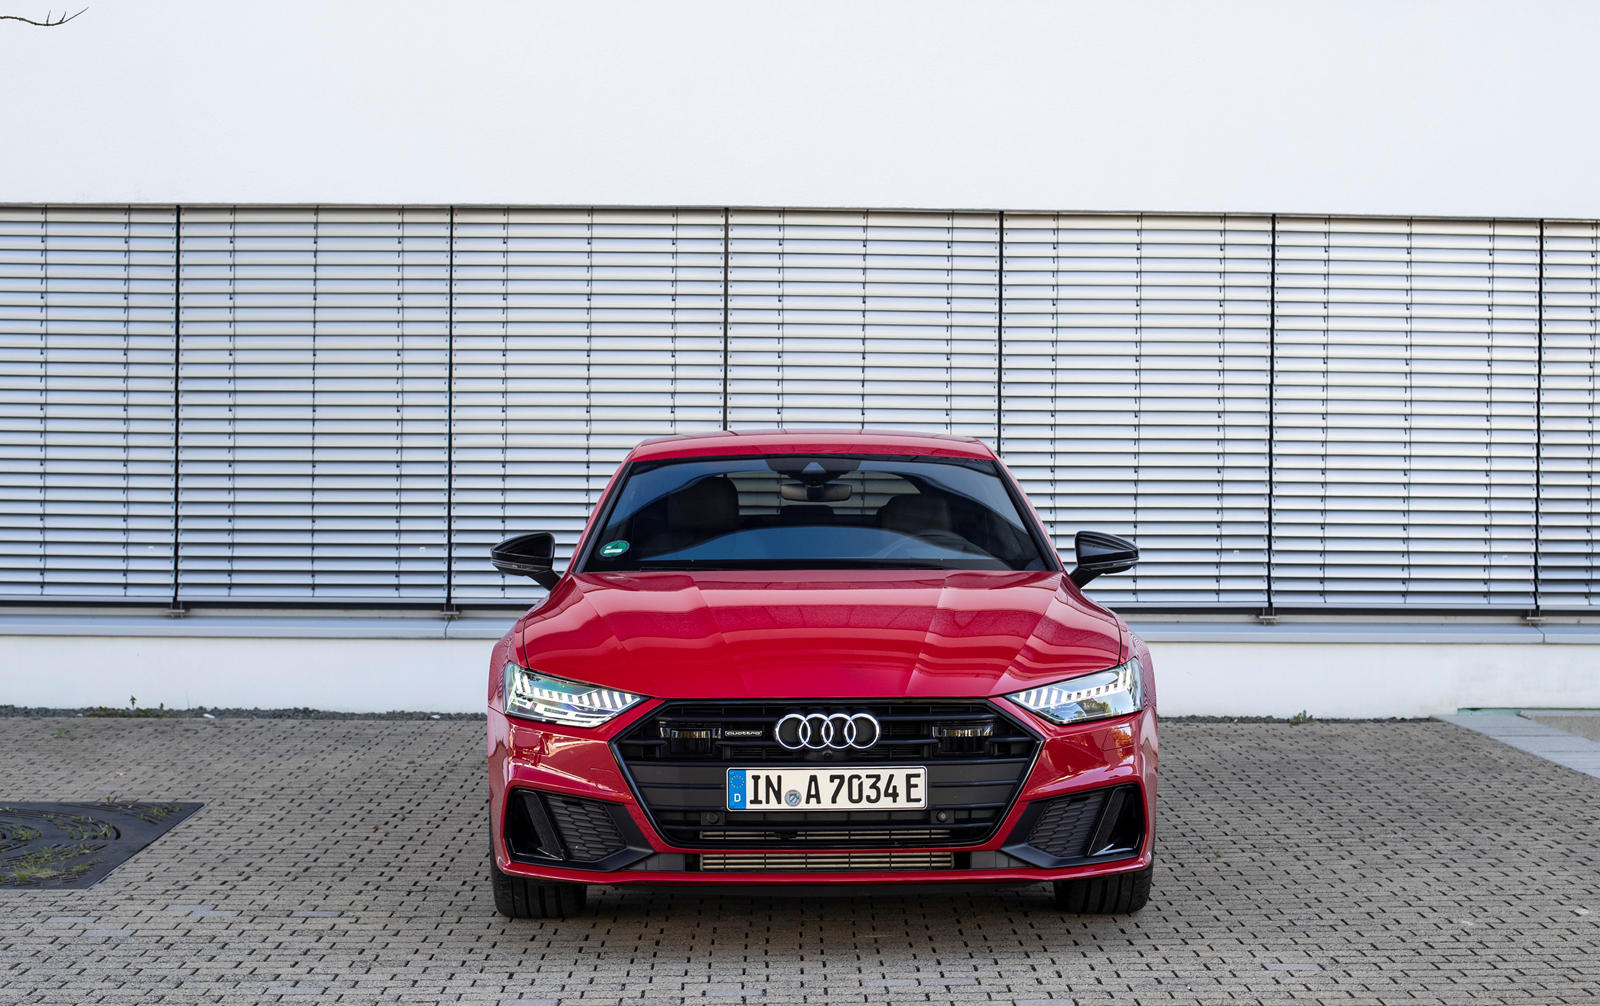 2022 Audi A7 Hybrid Front View